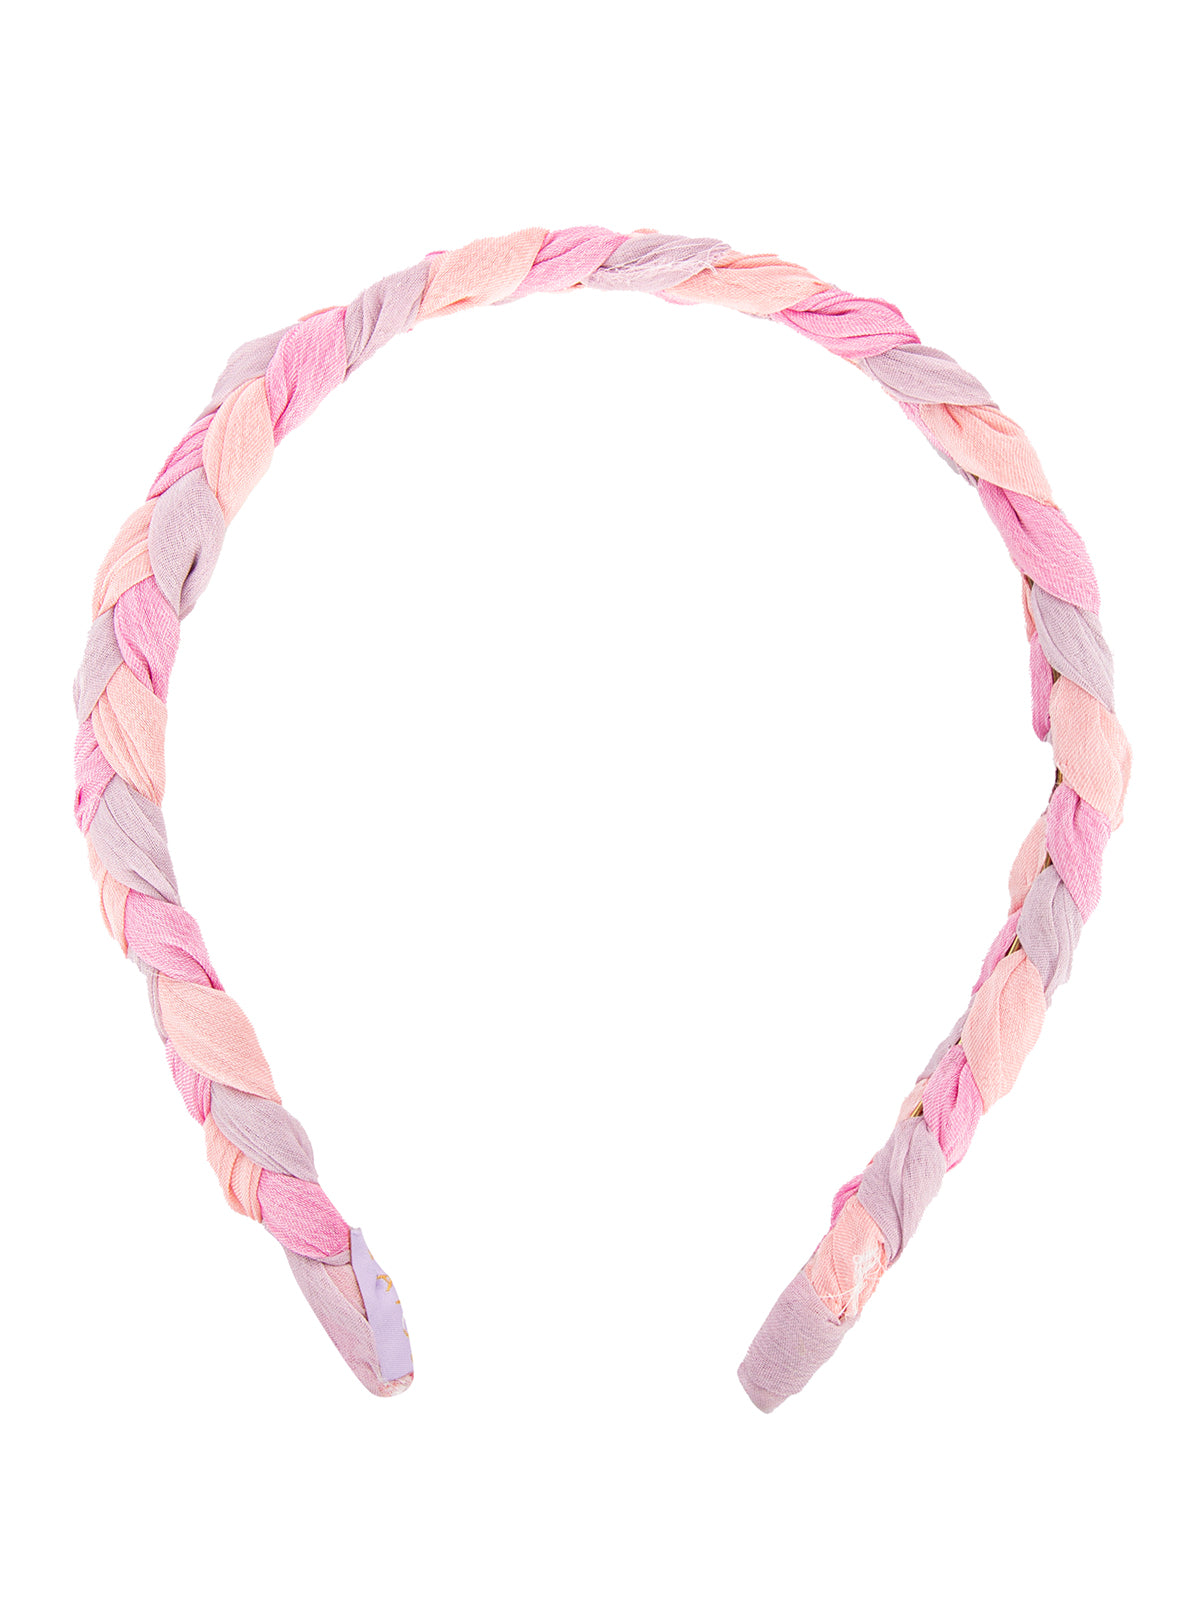 Shades of Pink Milkmaid Headband